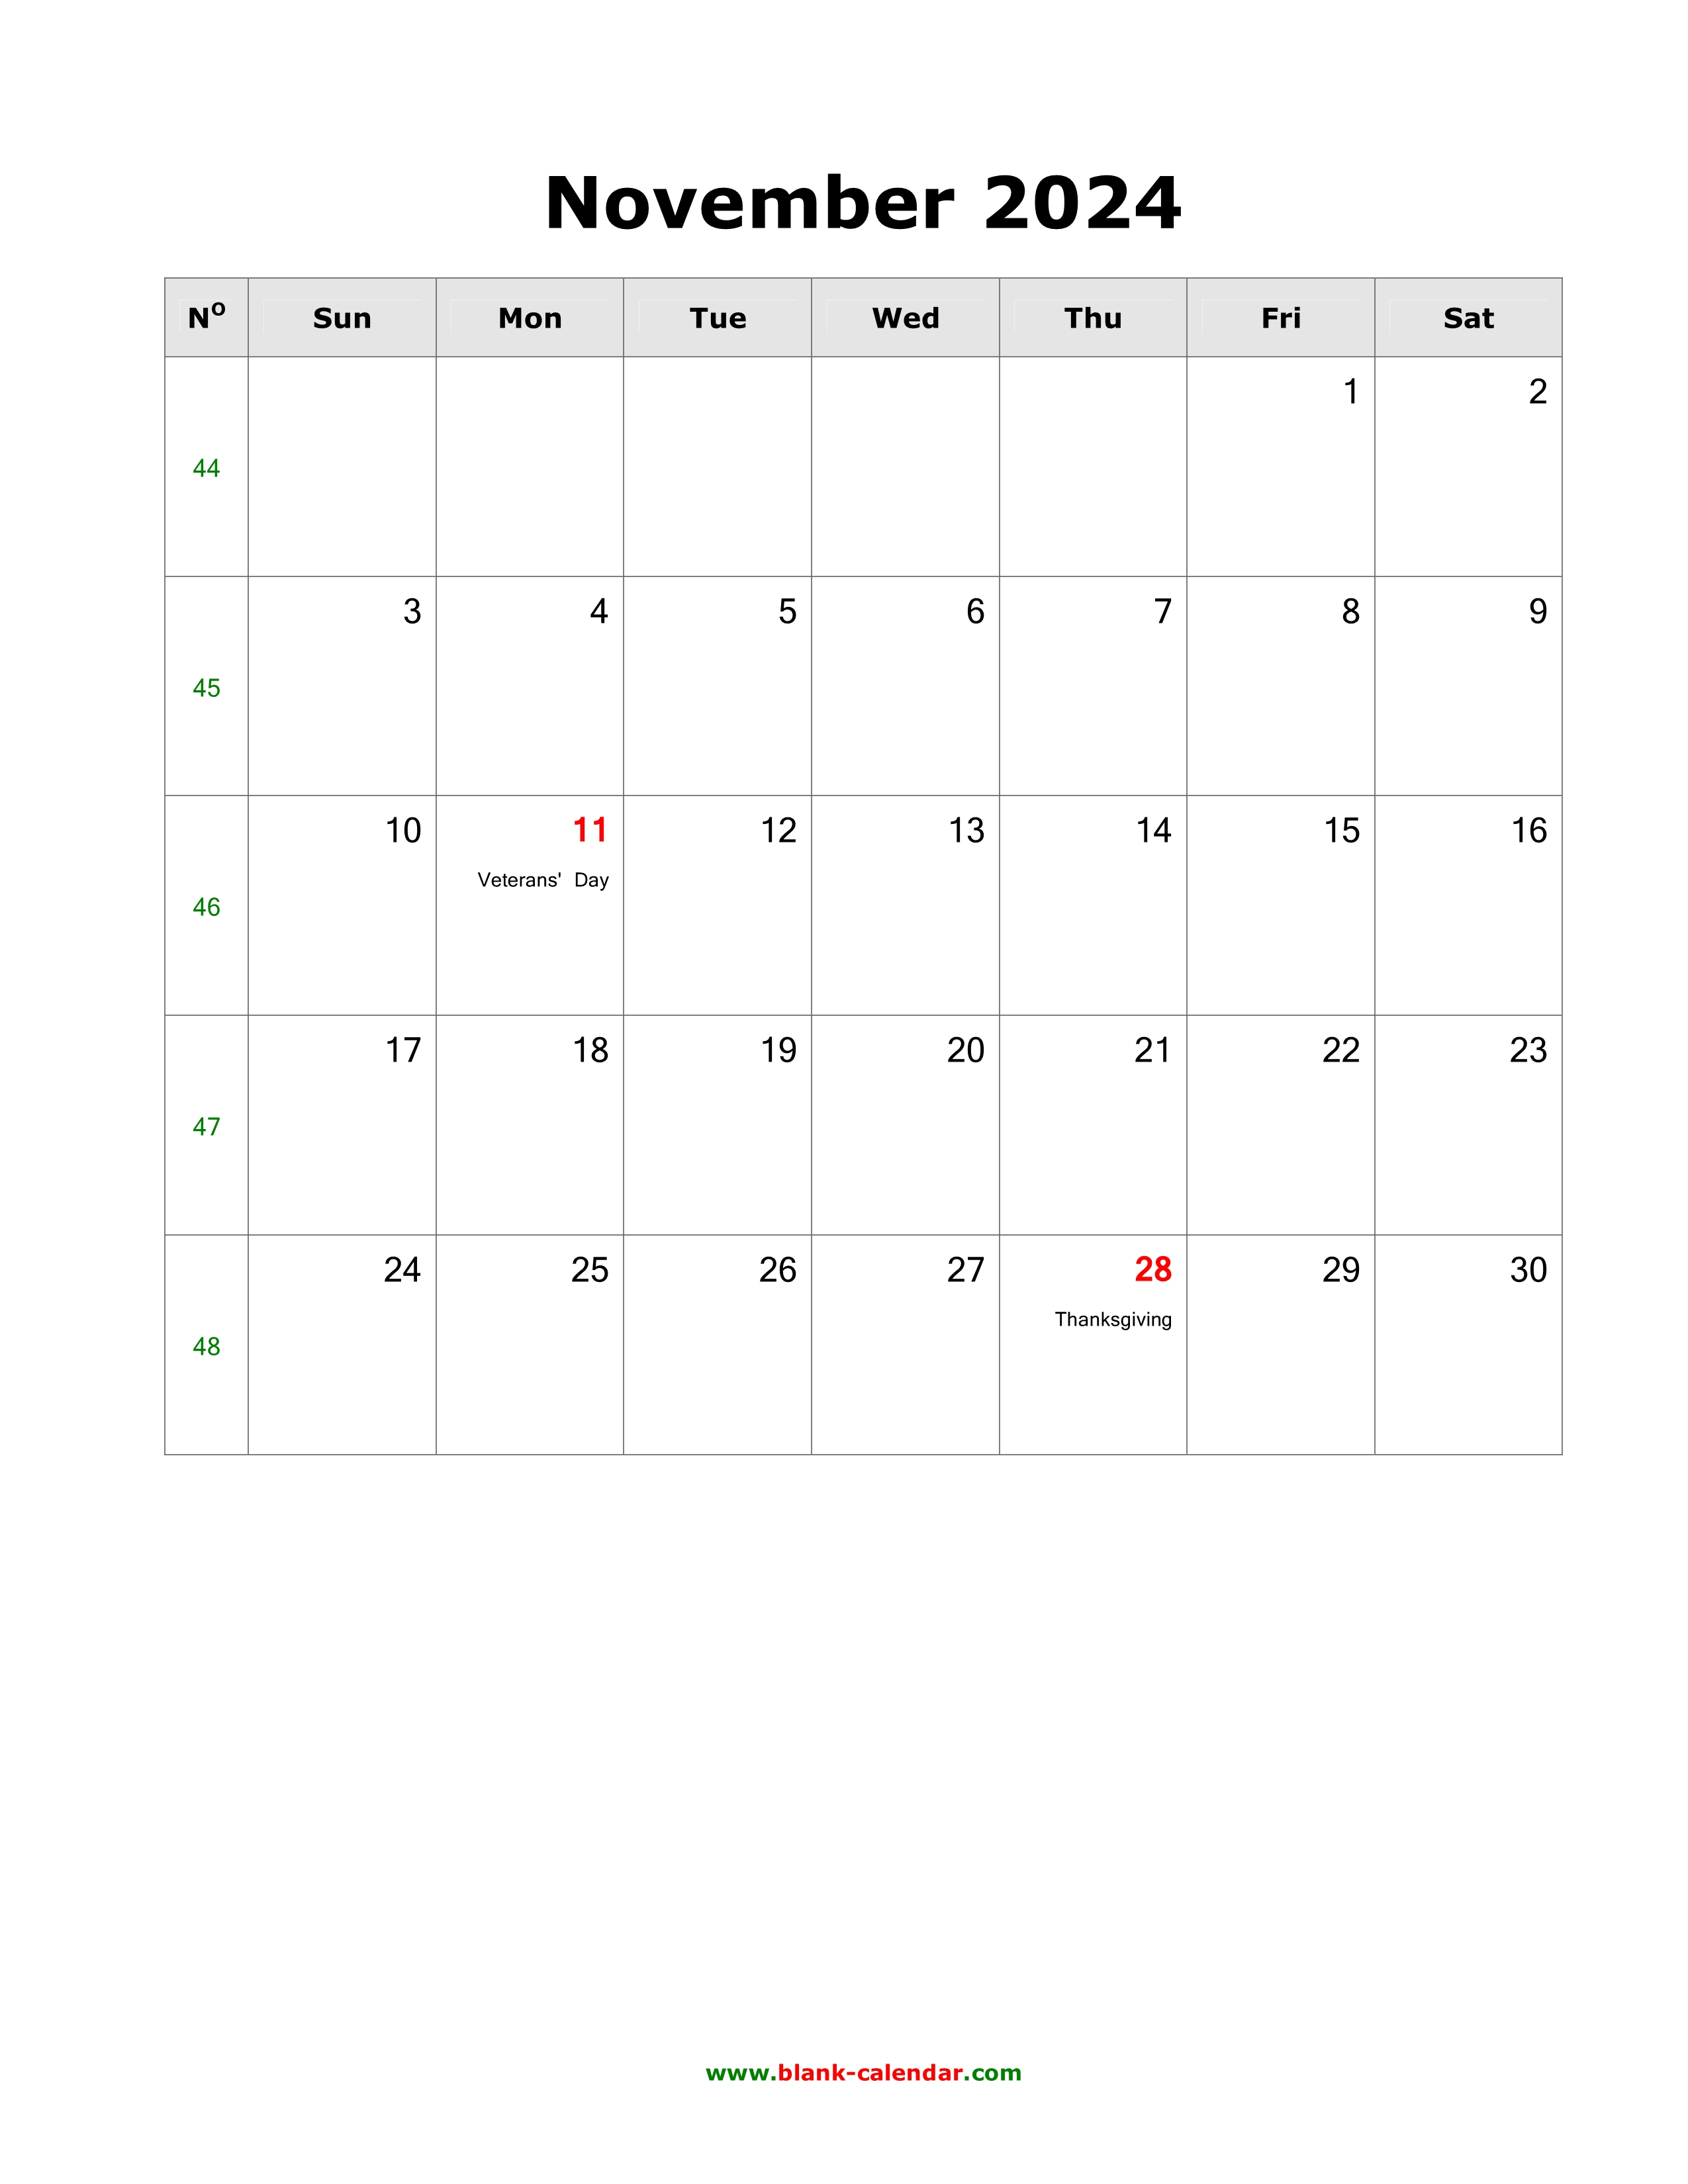 Download November 2024 Blank Calendar with US Holidays (vertical)